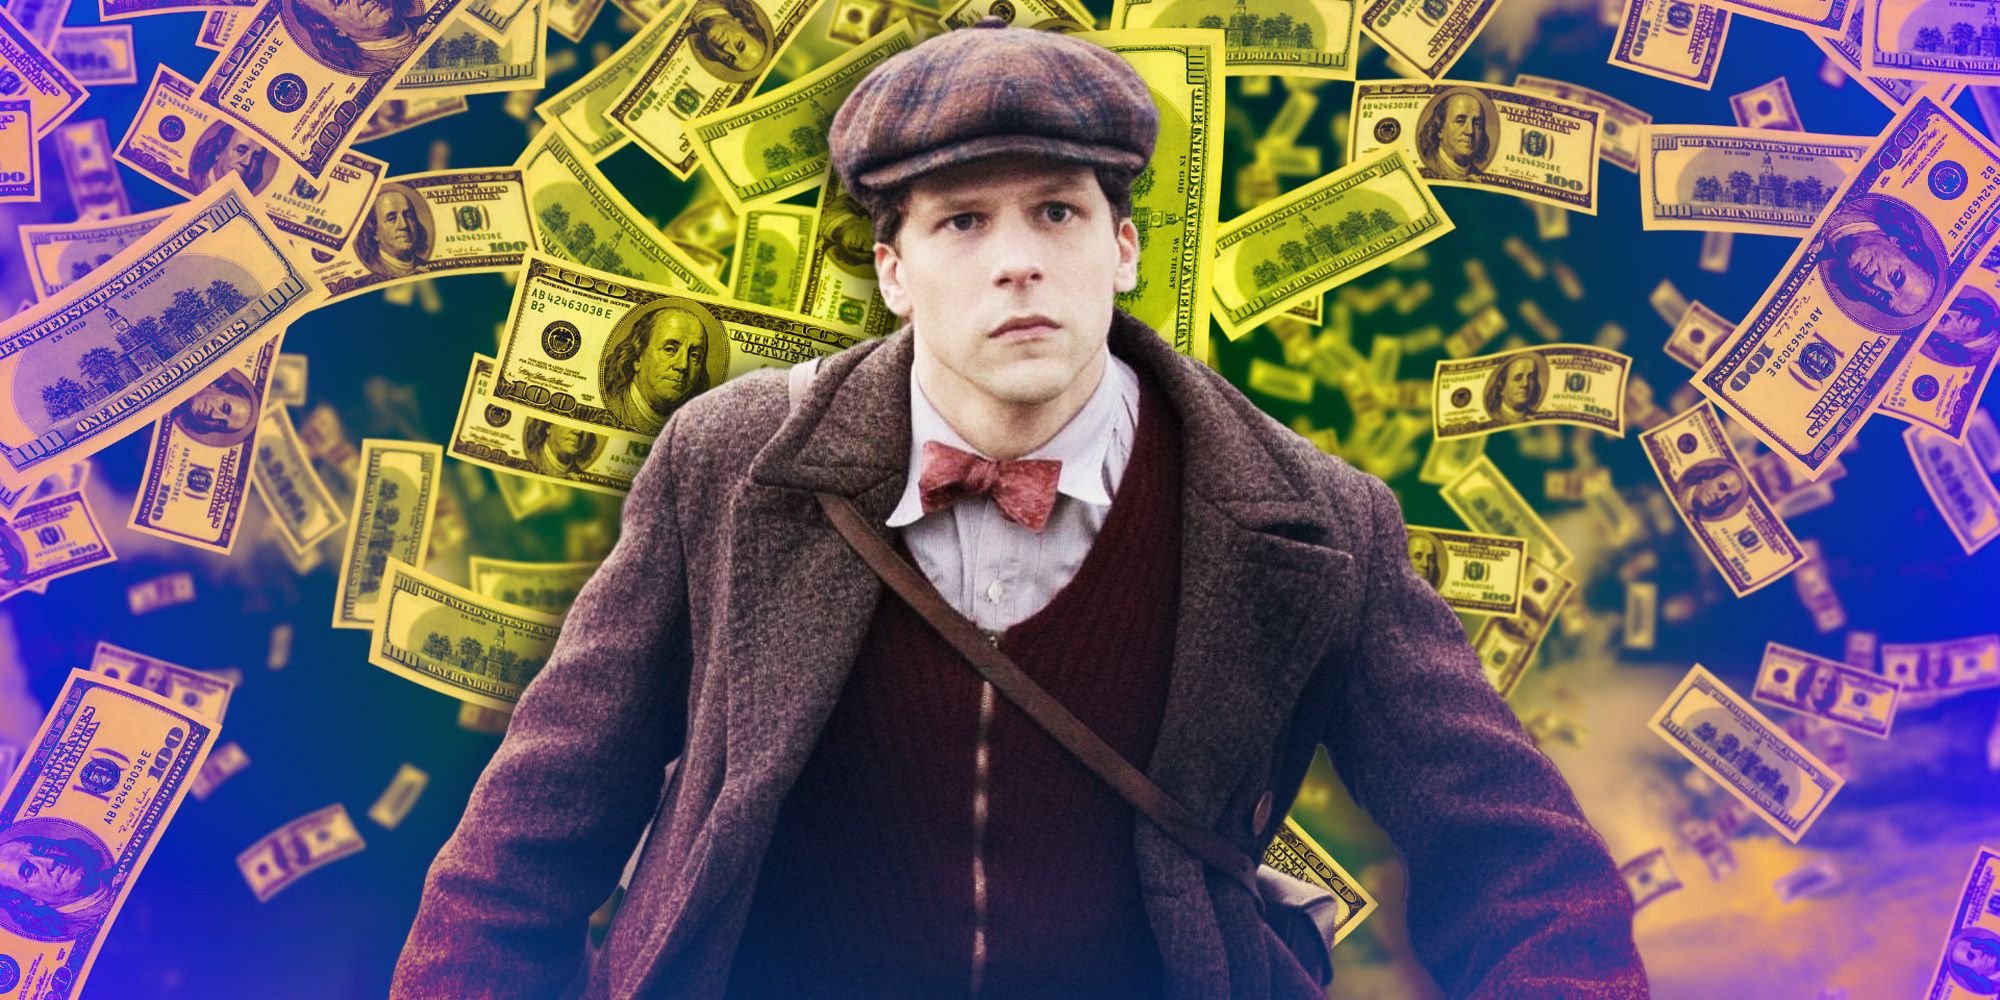 Jesse Eisenberg in Resistance against a backdrop of money